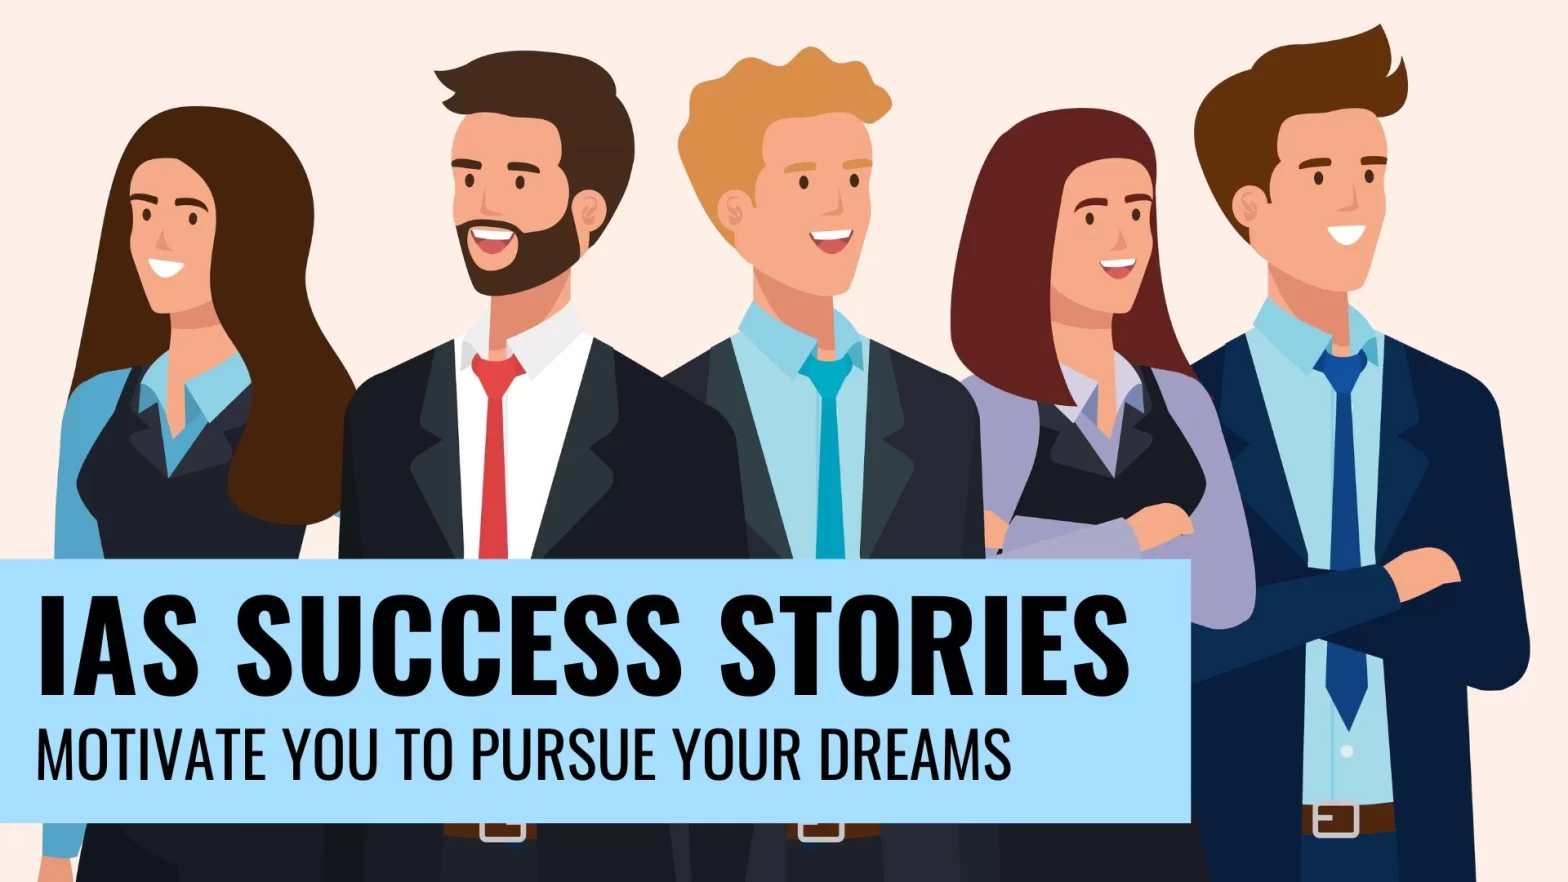 IAS Success Stories: Motivate You to Pursue Your Dreams